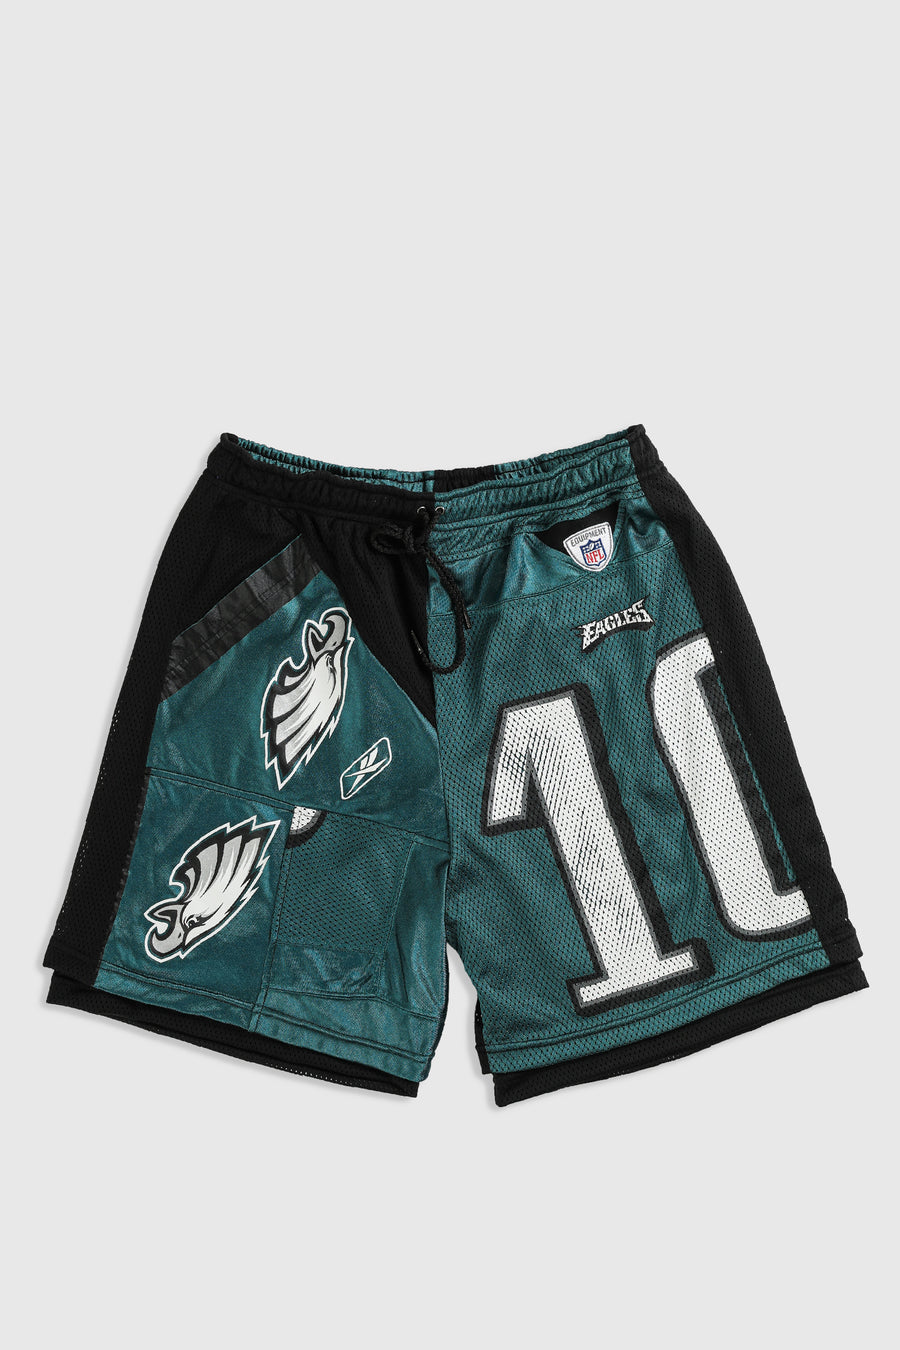 Unisex Rework Eagles NFL Jersey Shorts - L